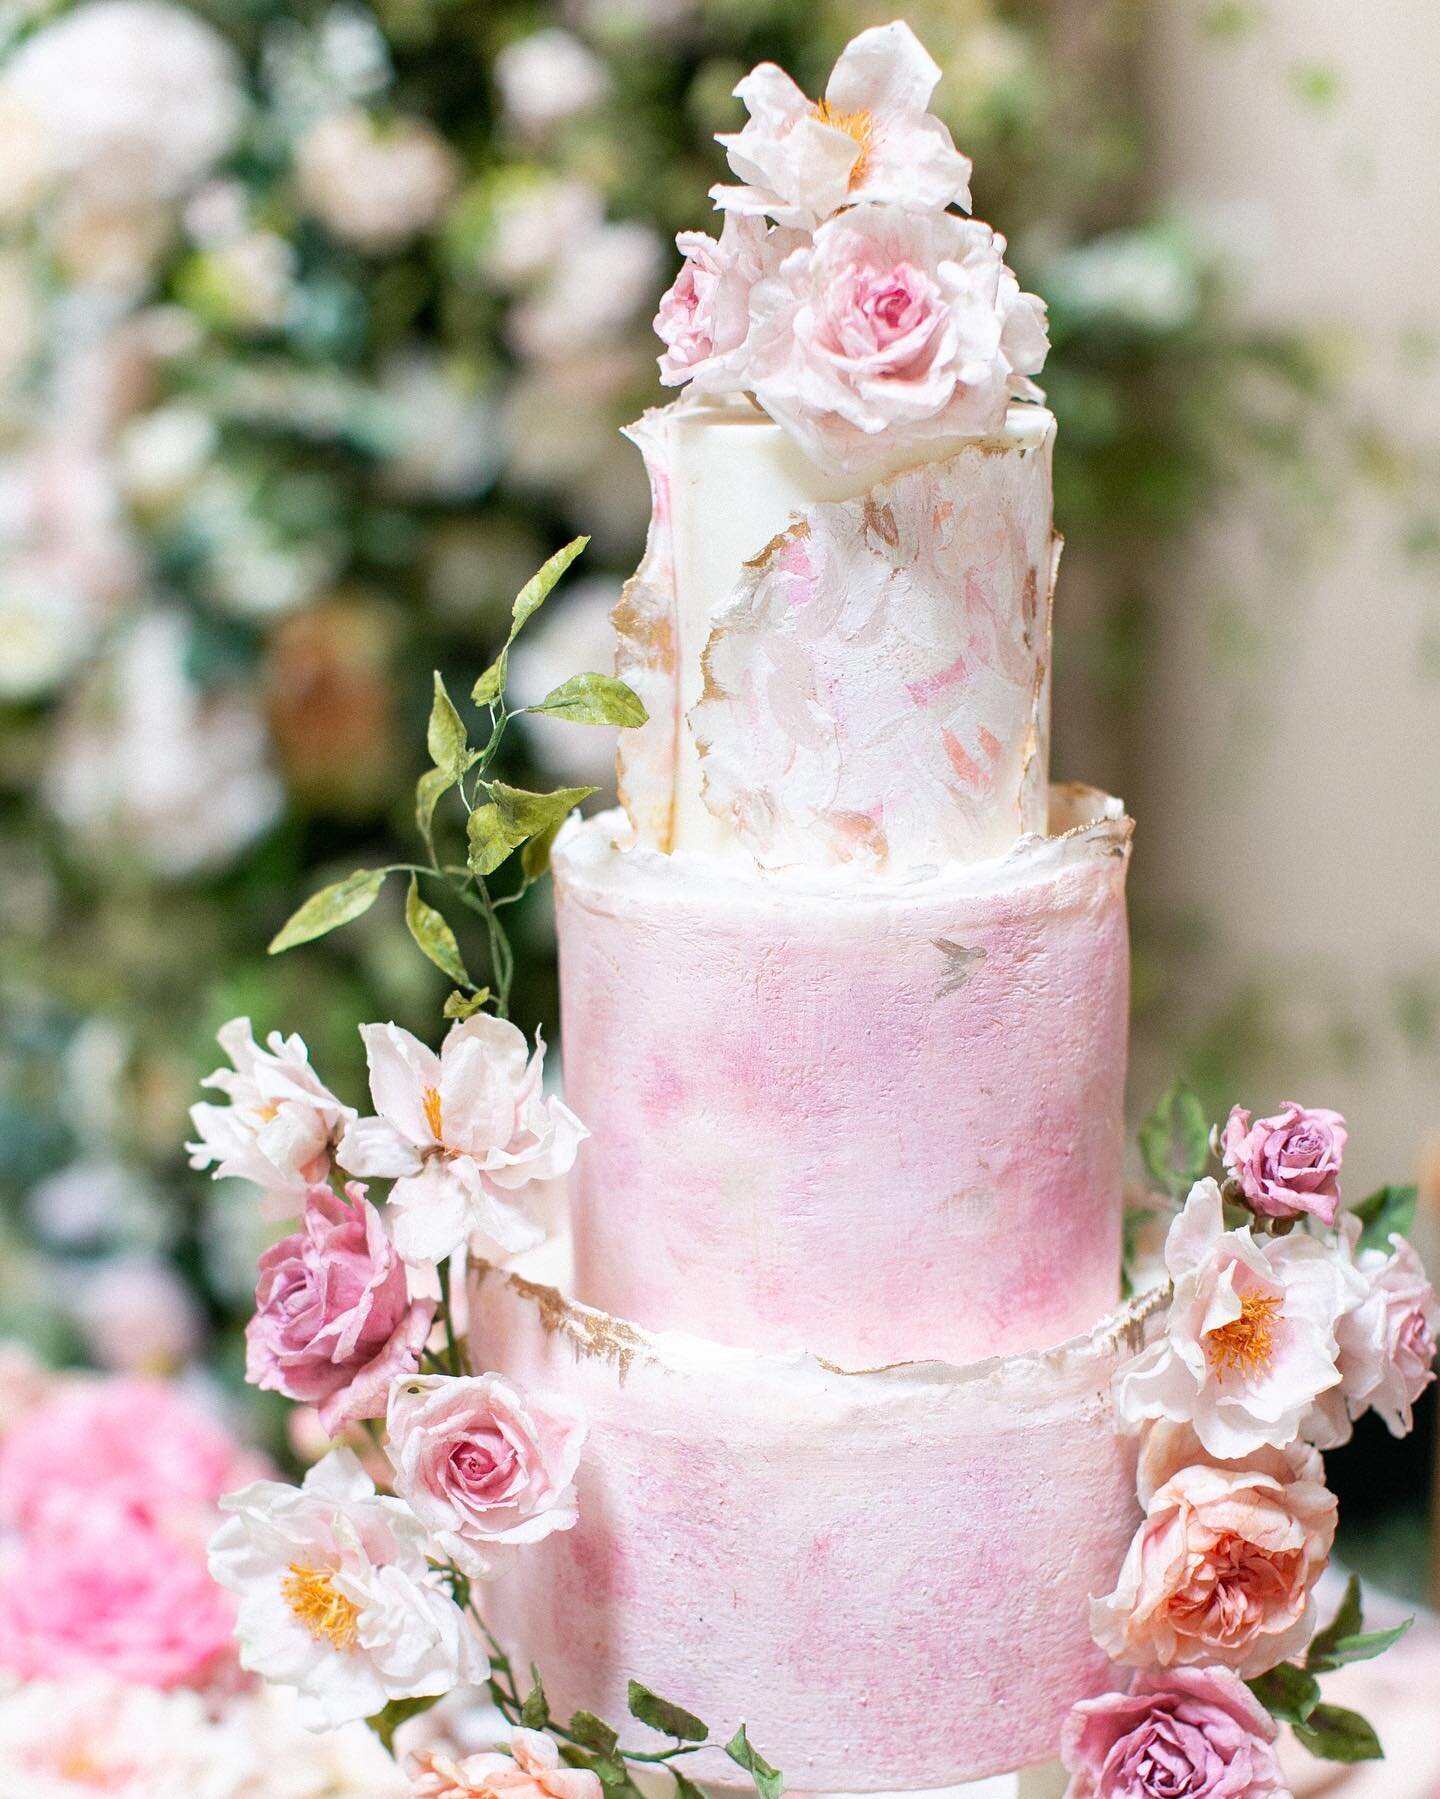 Still obsessing over this breathtaking cake design by @monikakossweets 🙌🏼💕
.
.
.
Photography: @annelimphoto 
Planner/Stylist: @amv_weddings 
Florals: @allforlovelondon
Venue: @stowevenuehire 
Hair/Makeup/Accessories: @botiashairandmakeup
Wedding C